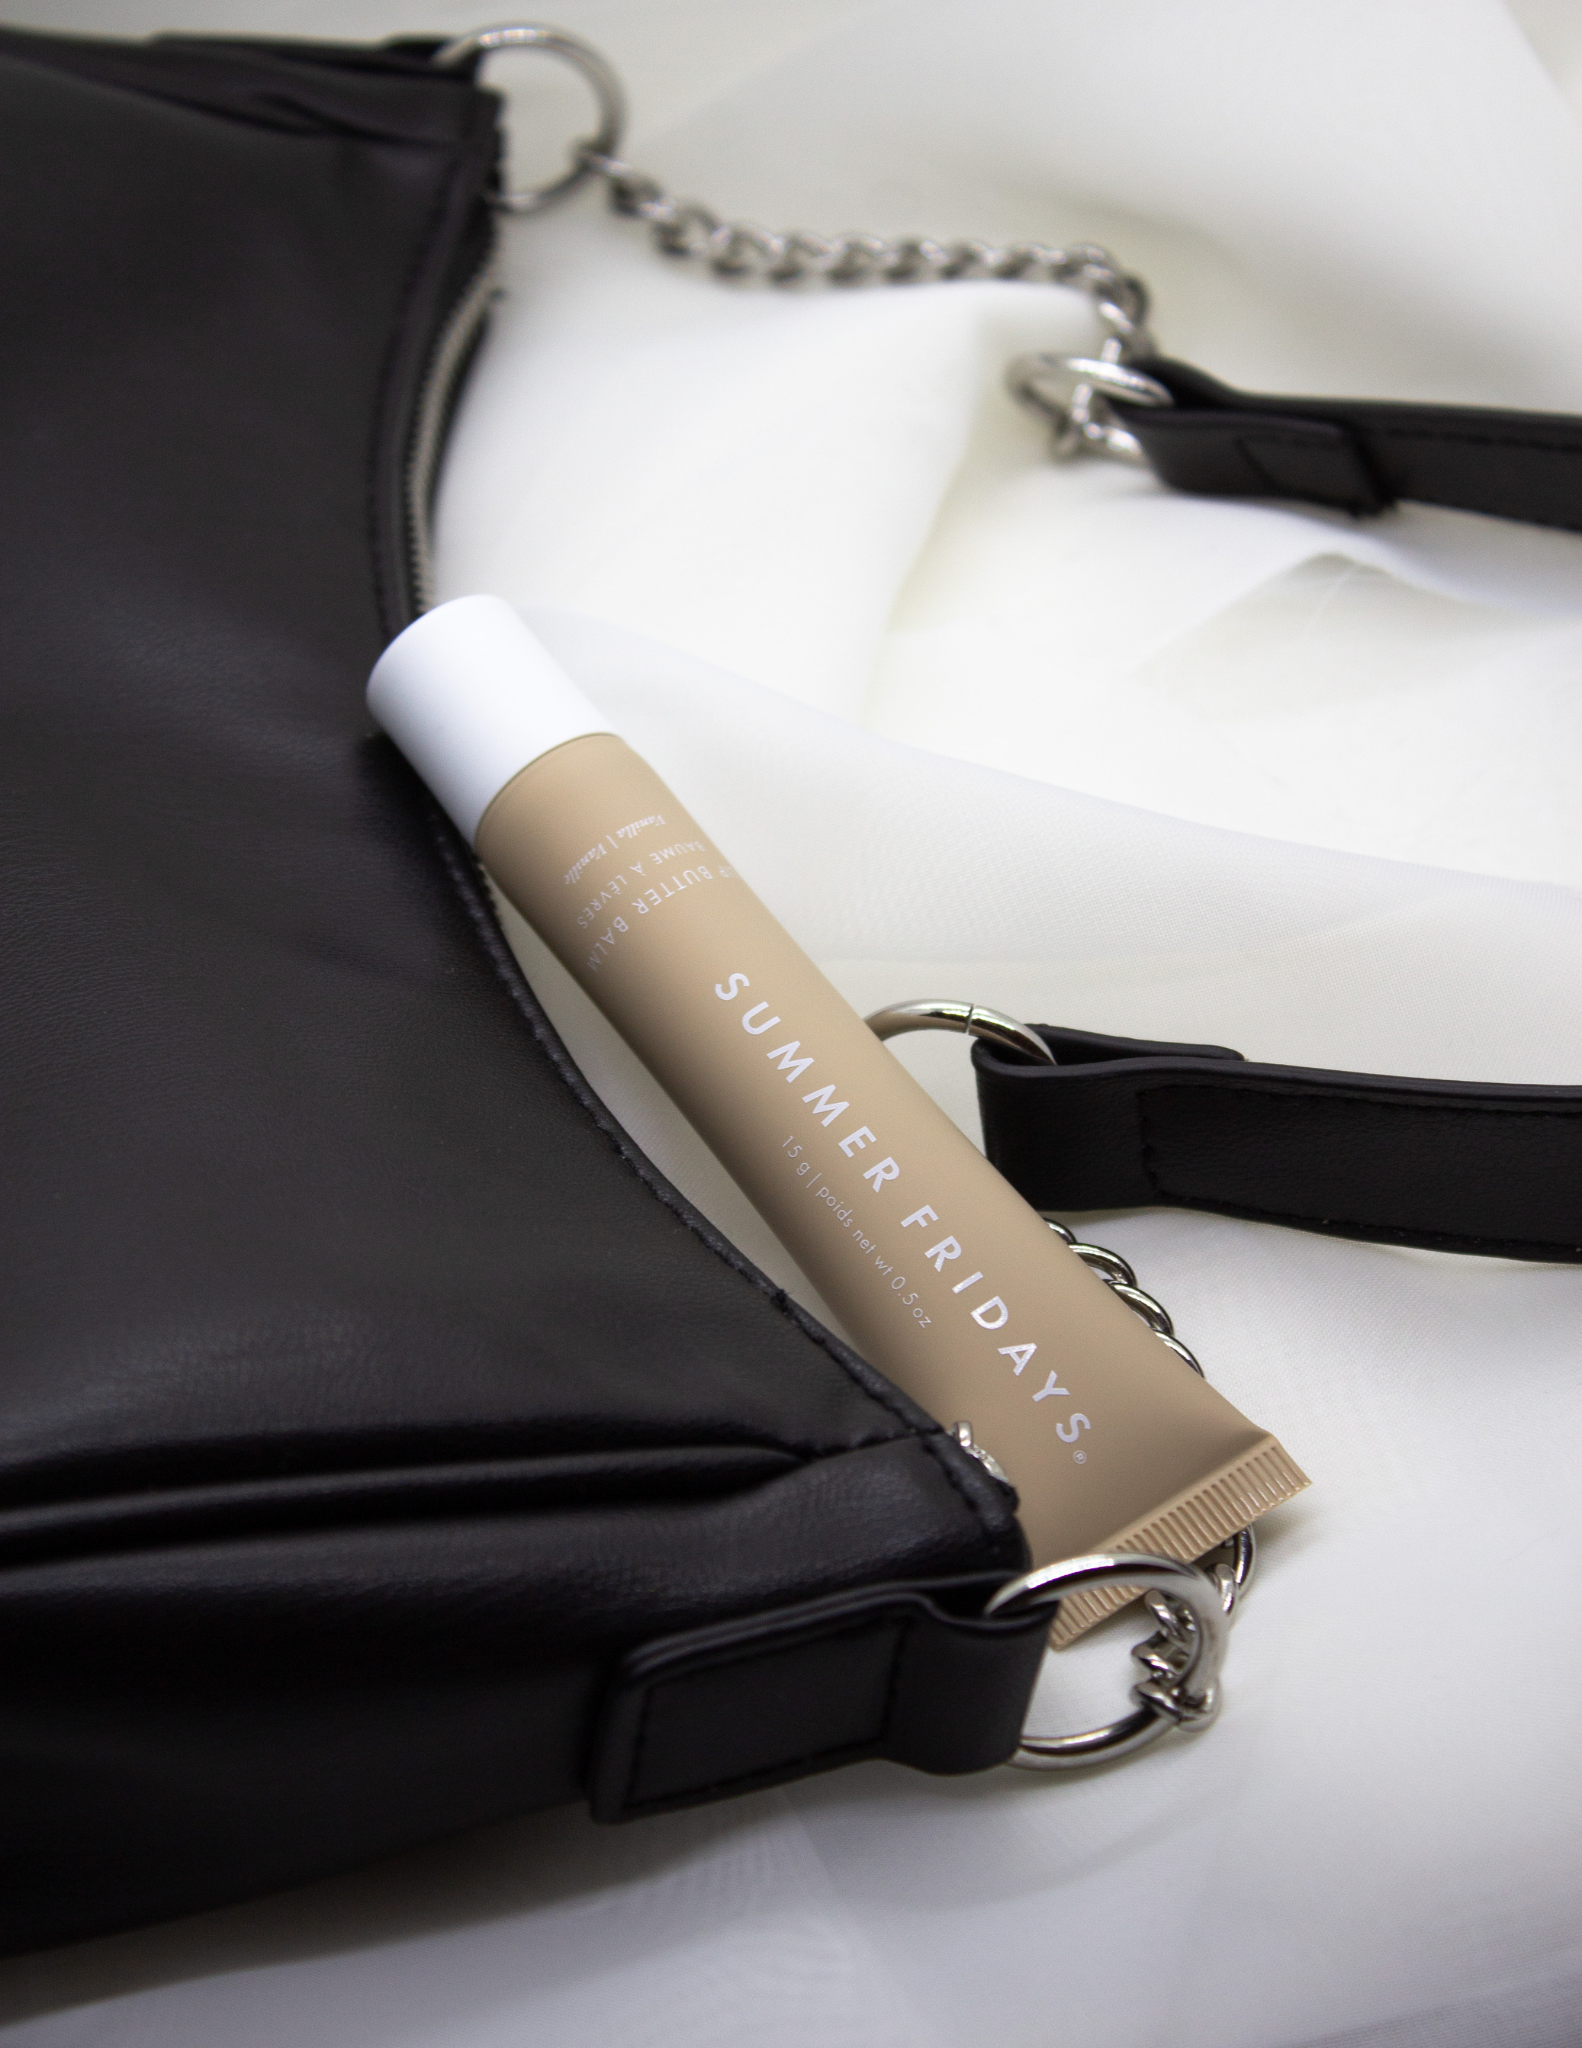 Summer Fridays Lip Butter Balm displayed alongside a stylish black purse, highlighting the sleek packaging against the dark backdrop.